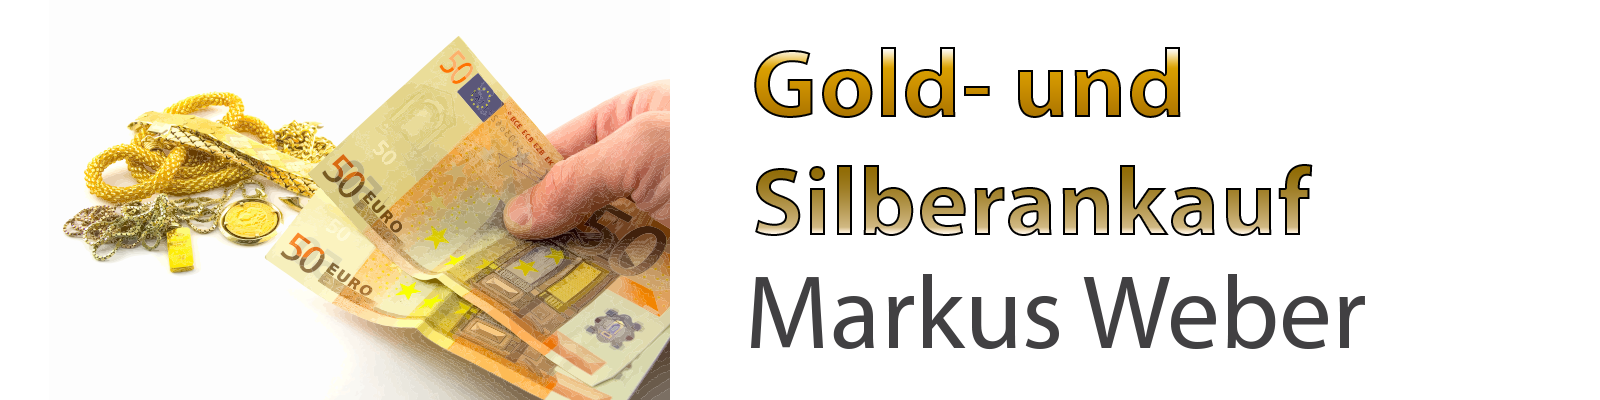 Goldankauf Kirchheimbolanden - Markus Weber